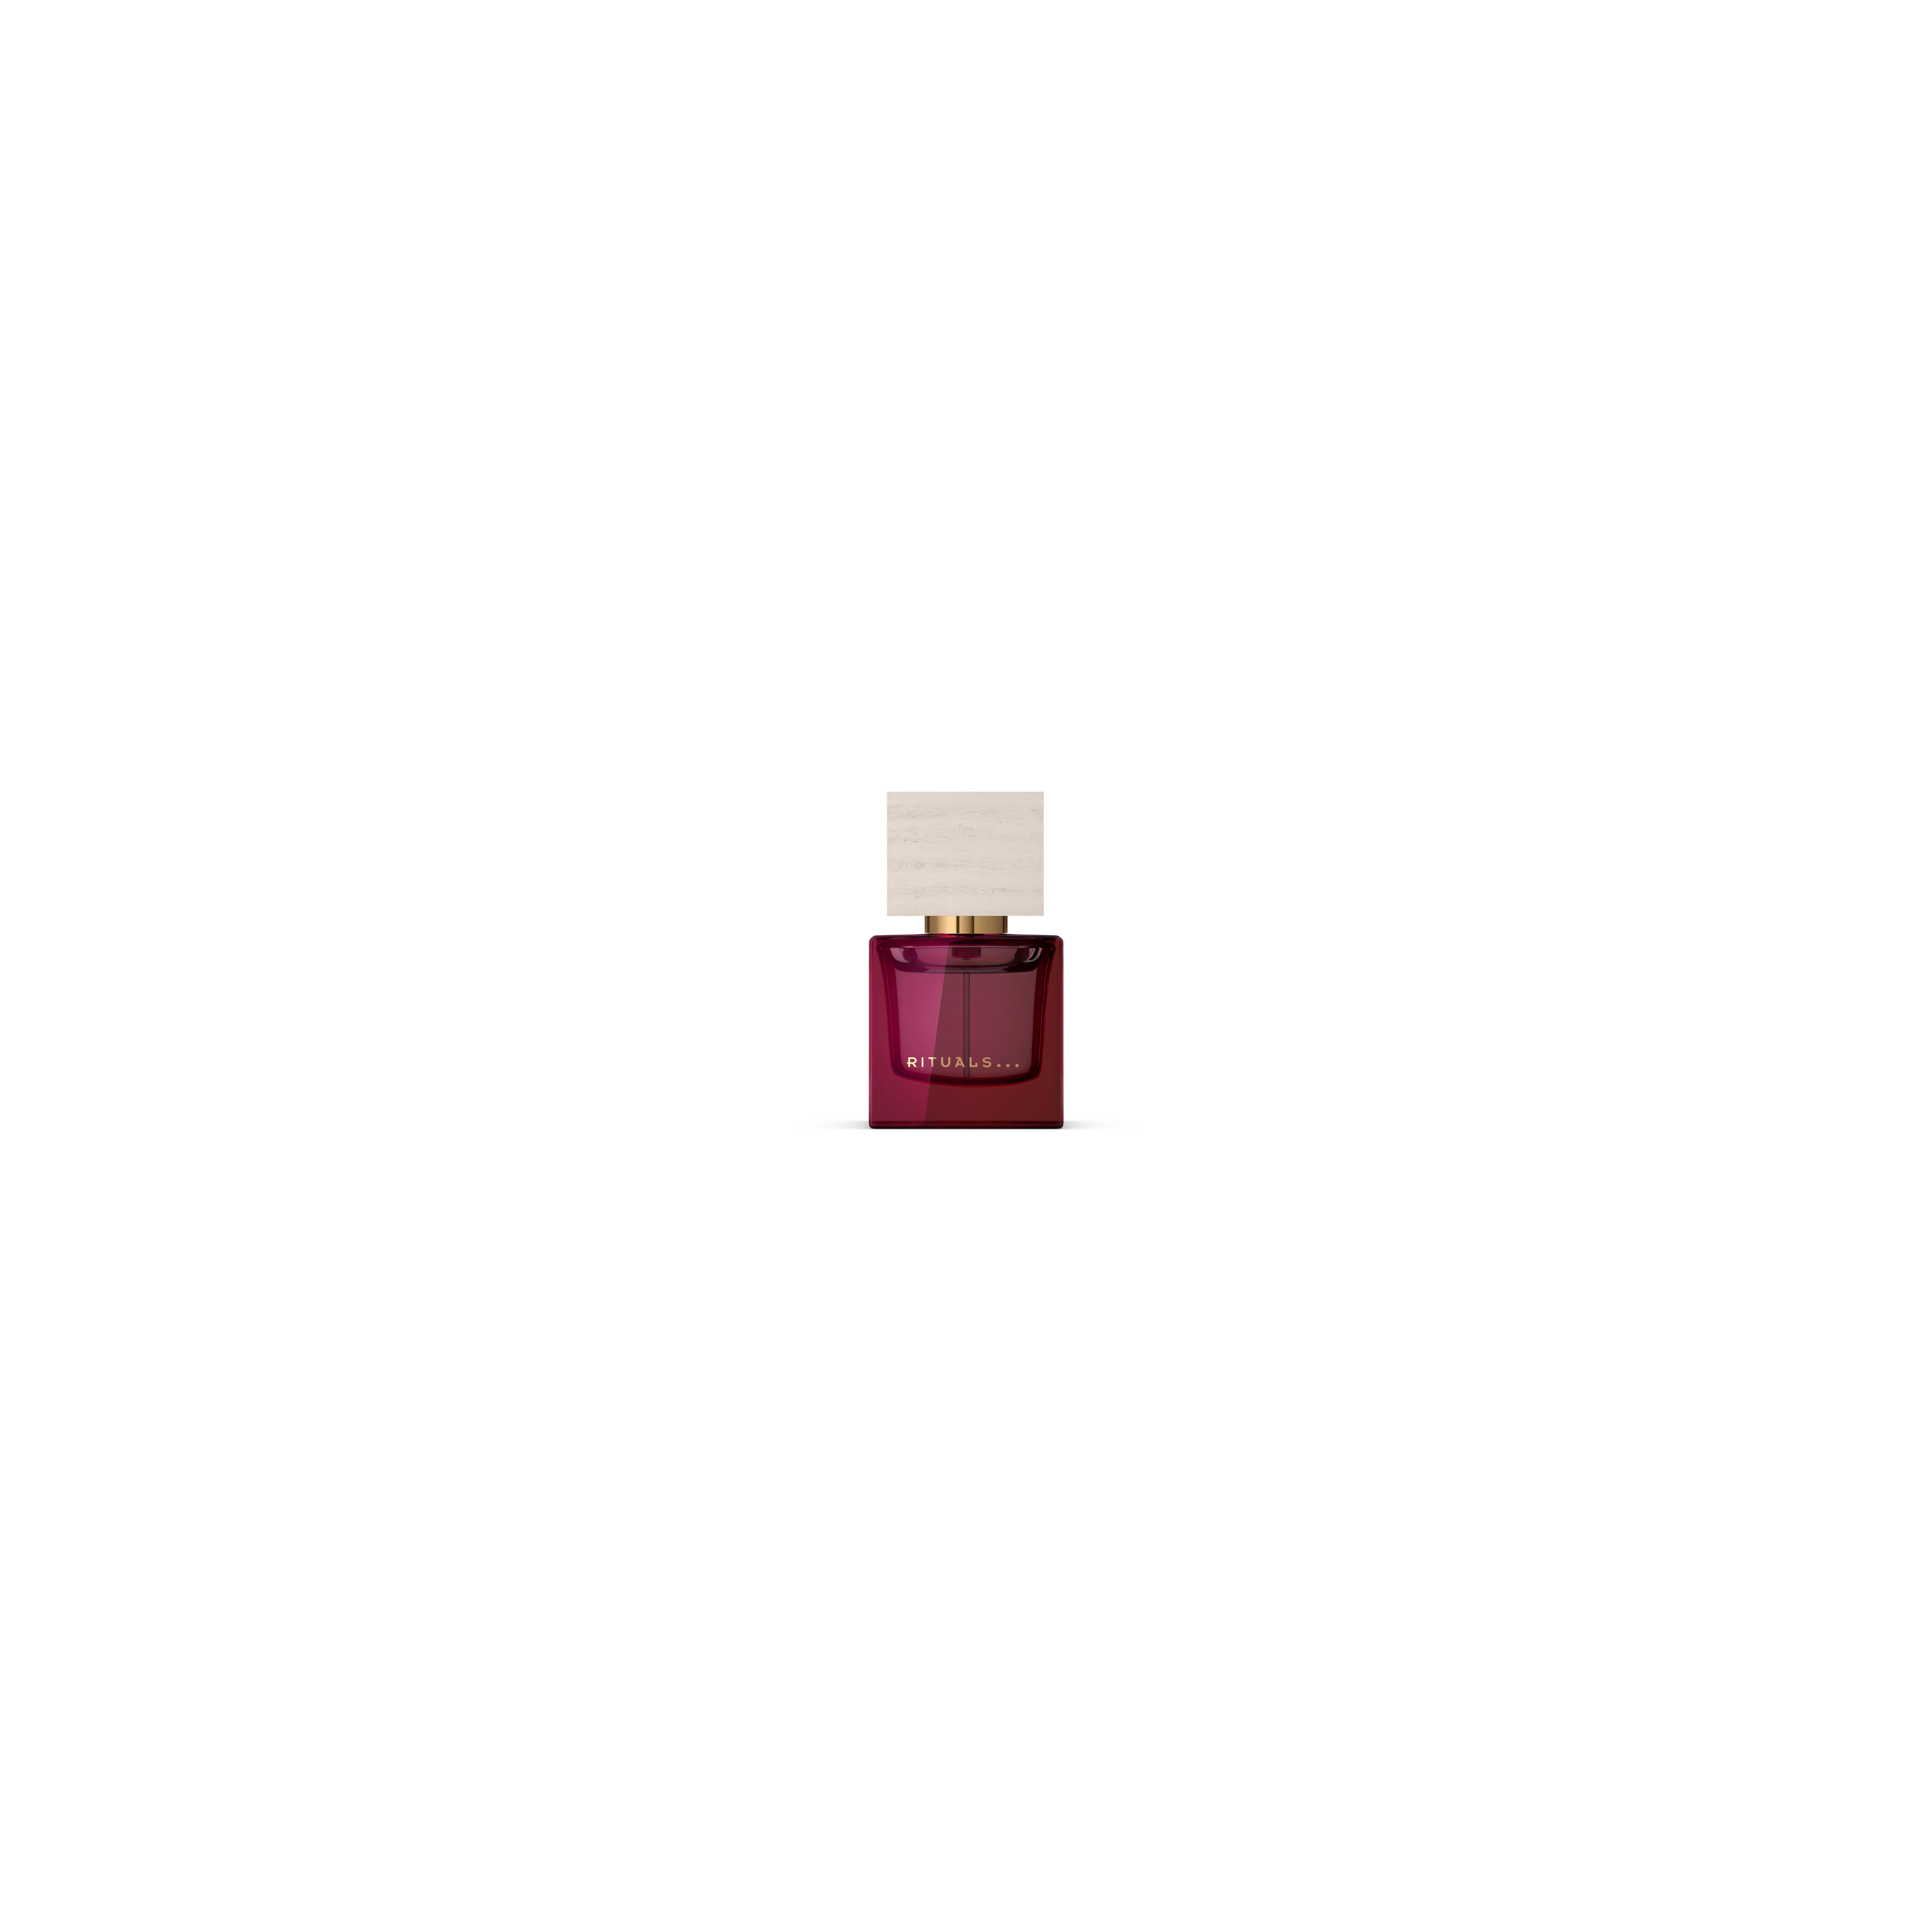 Rituals Eau d'Orient - 15 ml - Travel Perfume for Her